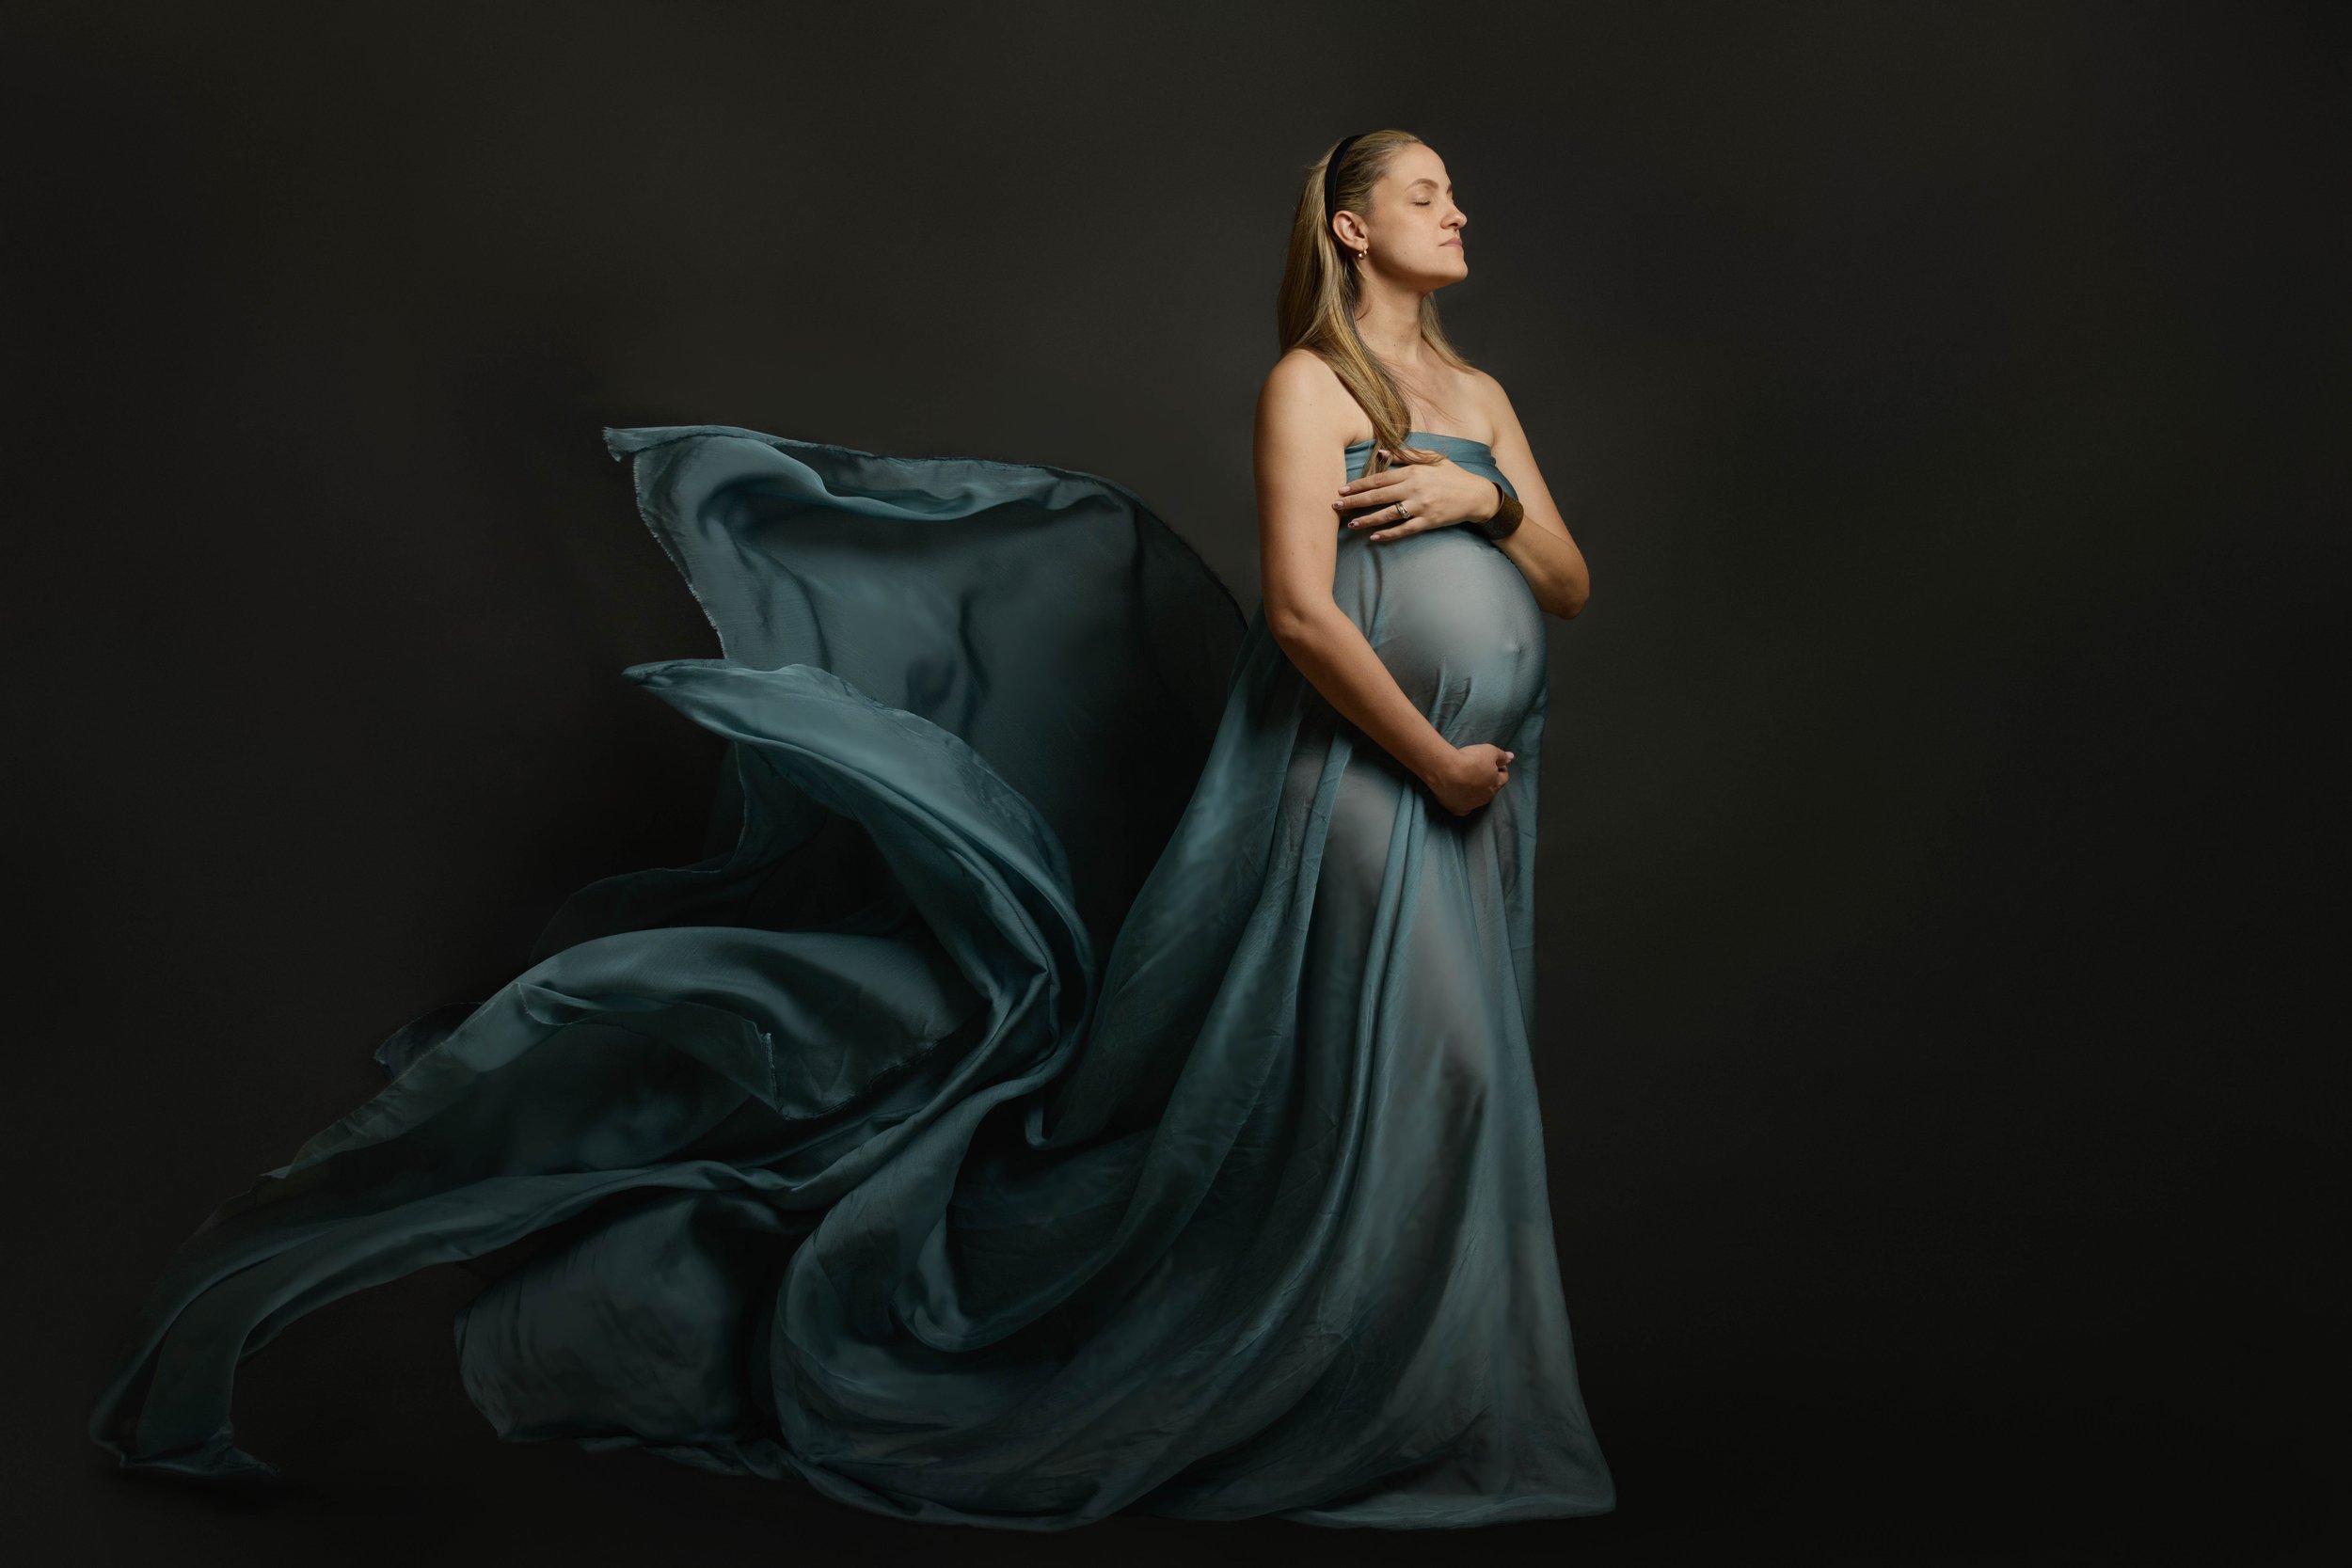 maternity-pregnancy-photographer-san-juan-puerto-rico-fabric-dress-gown-fotografa-maternidad-embarazo-31.jpg